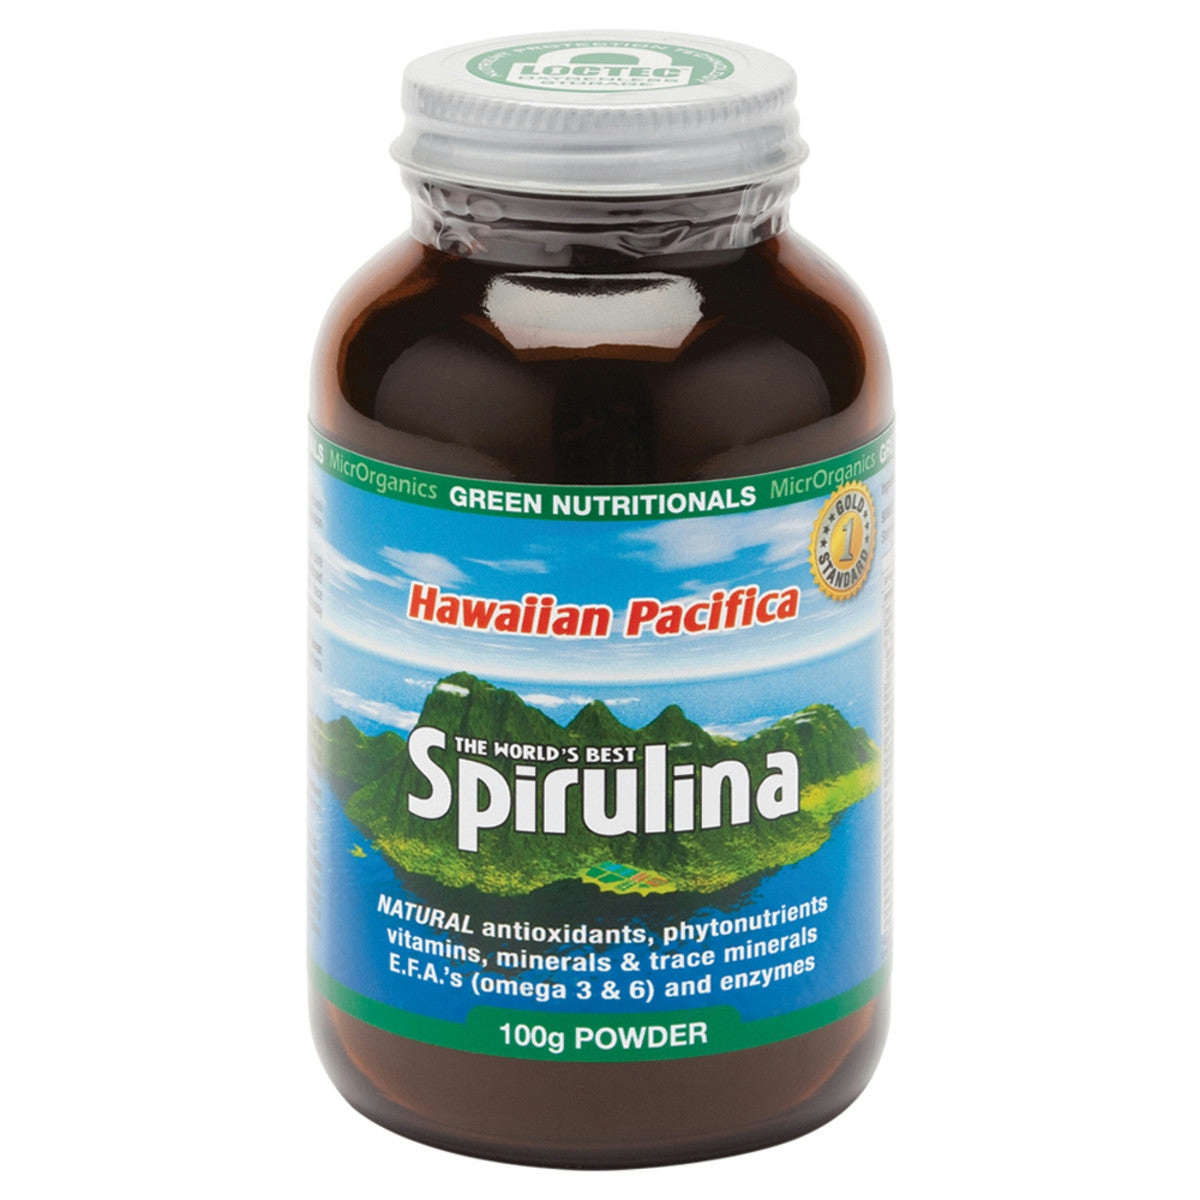 image of MicrOrganics Green Nutritionals Hawaiian Pacifica Spirulina 100g Powder on white background